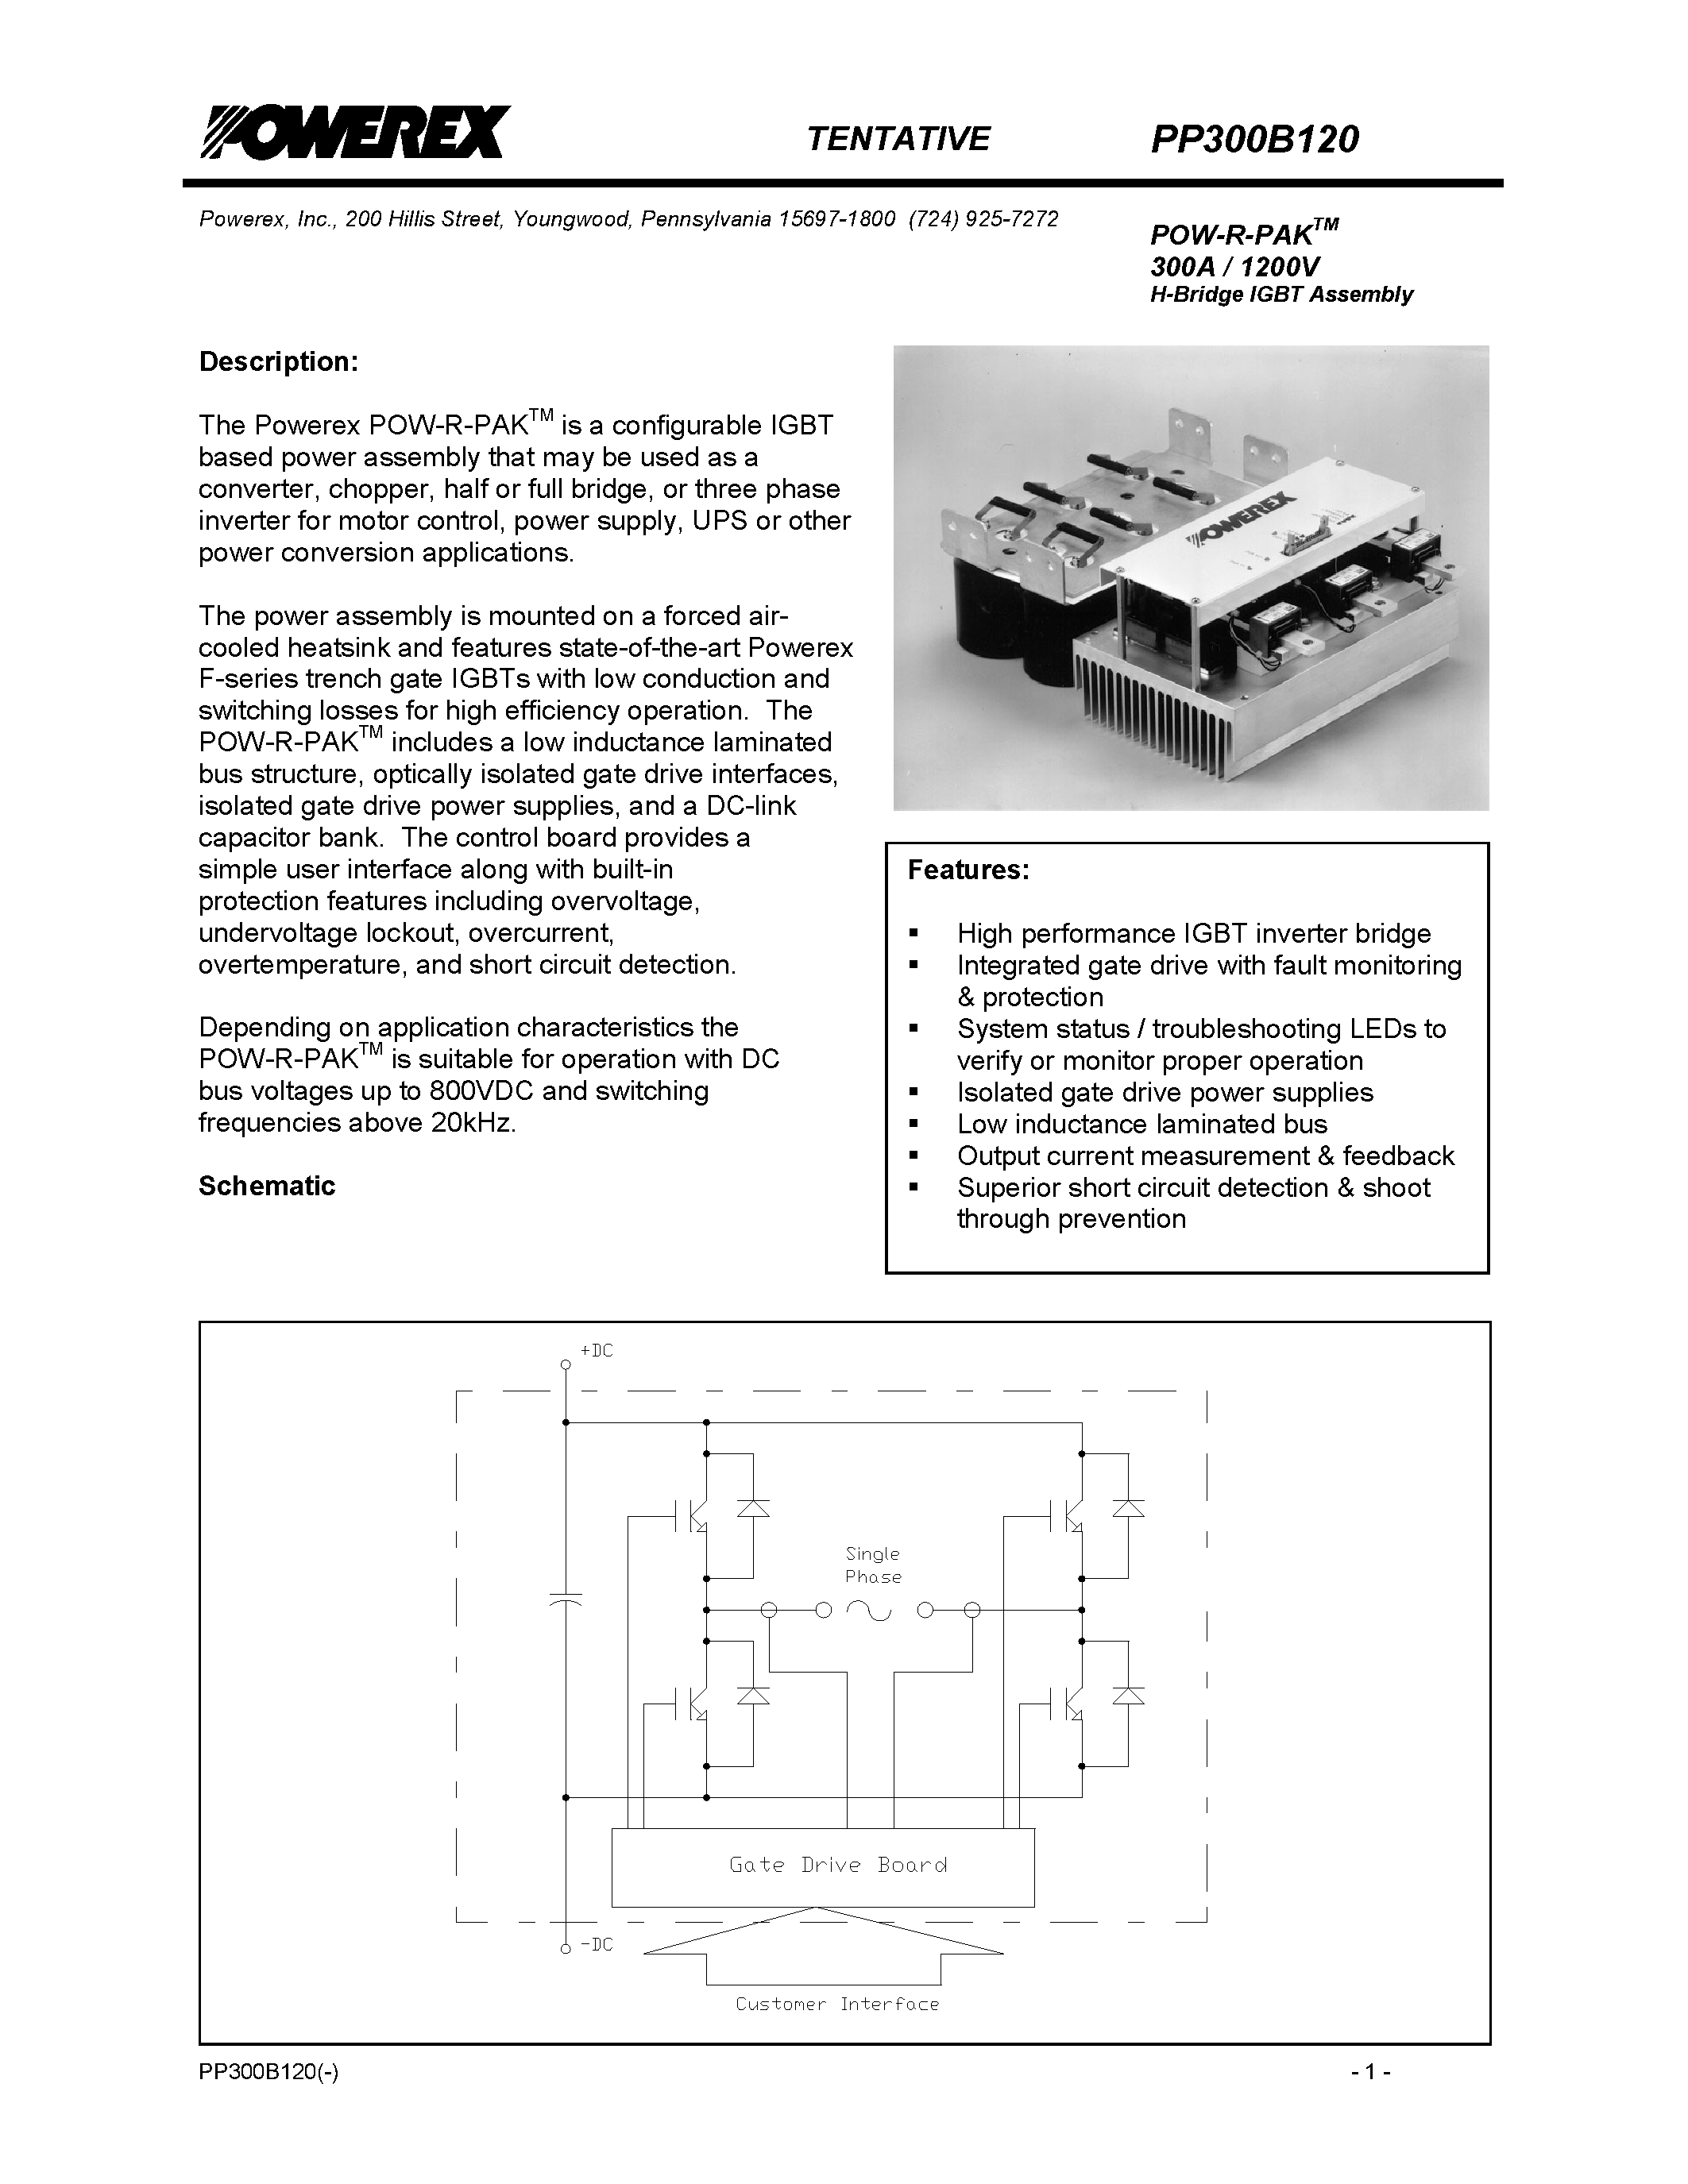 Datasheet PP300B120 - POW-R-PAK 300A / 1200V H-Bridge IGBT Assembly page 1